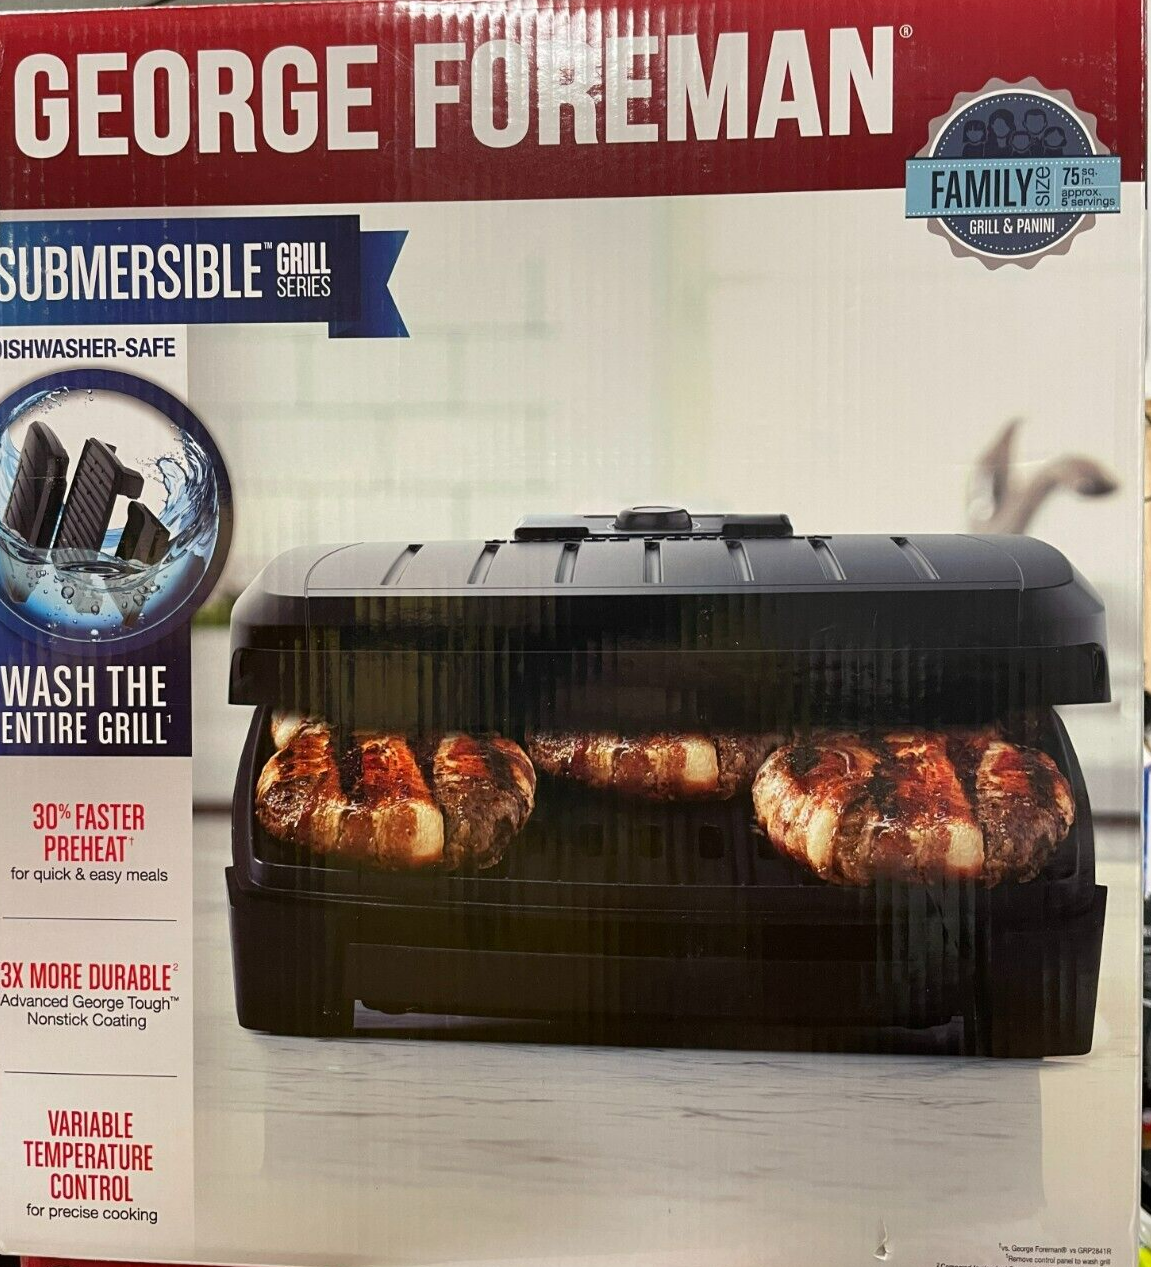 George Foreman - GRECV075B - 5-Serving Submersible Grill - Black Plates - $99.95